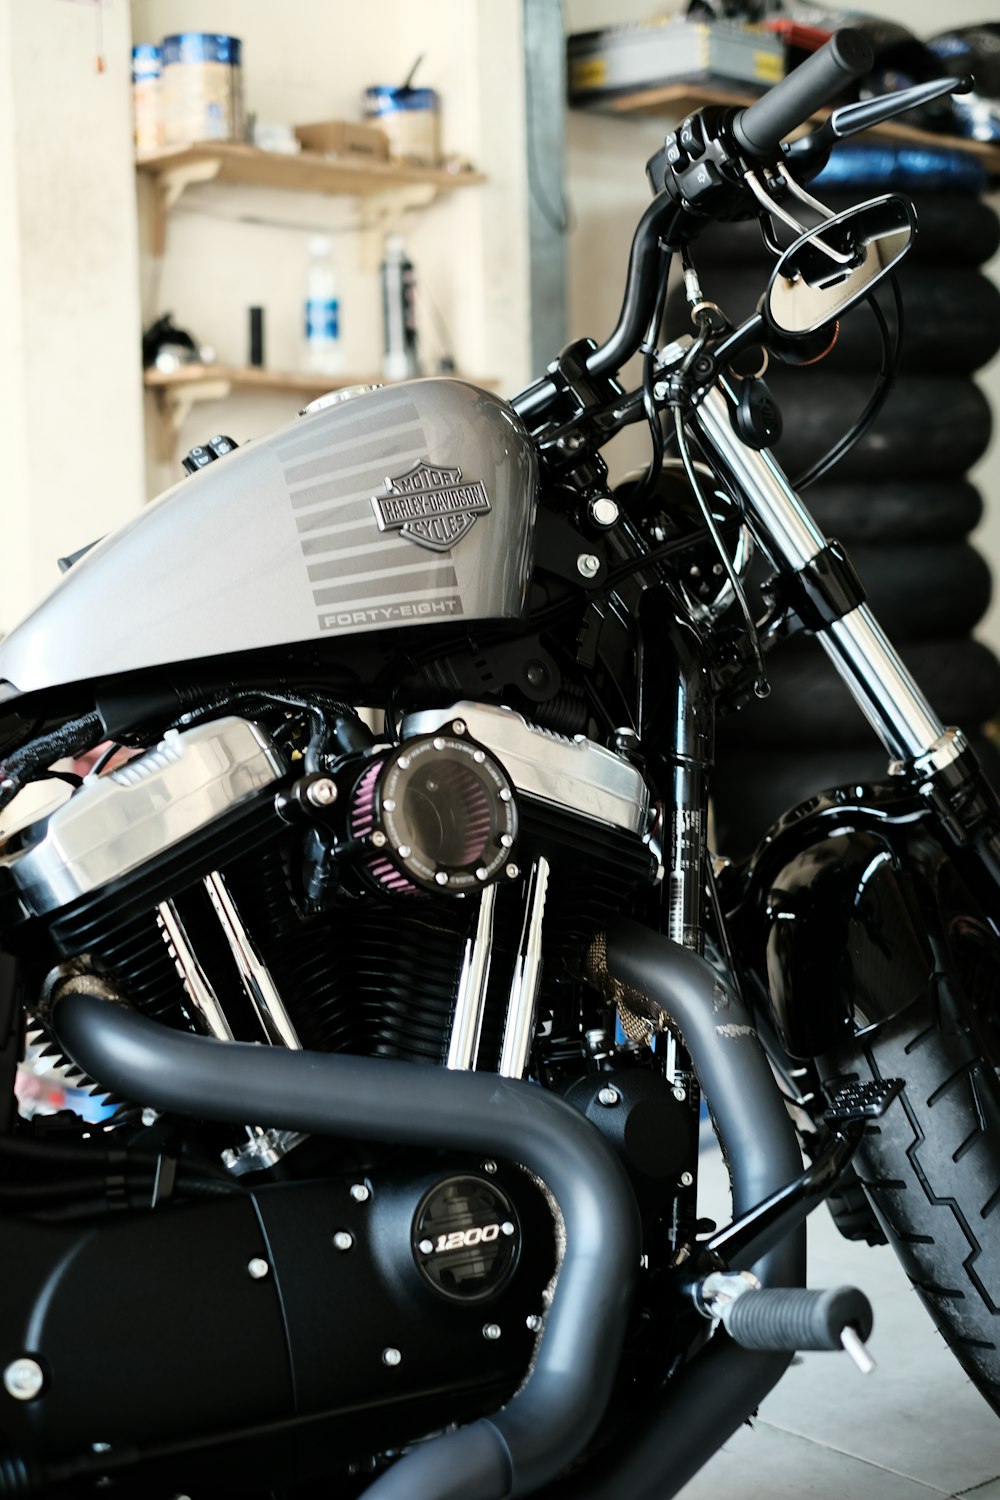 Motocicleta Harley-Davidson negra y gris